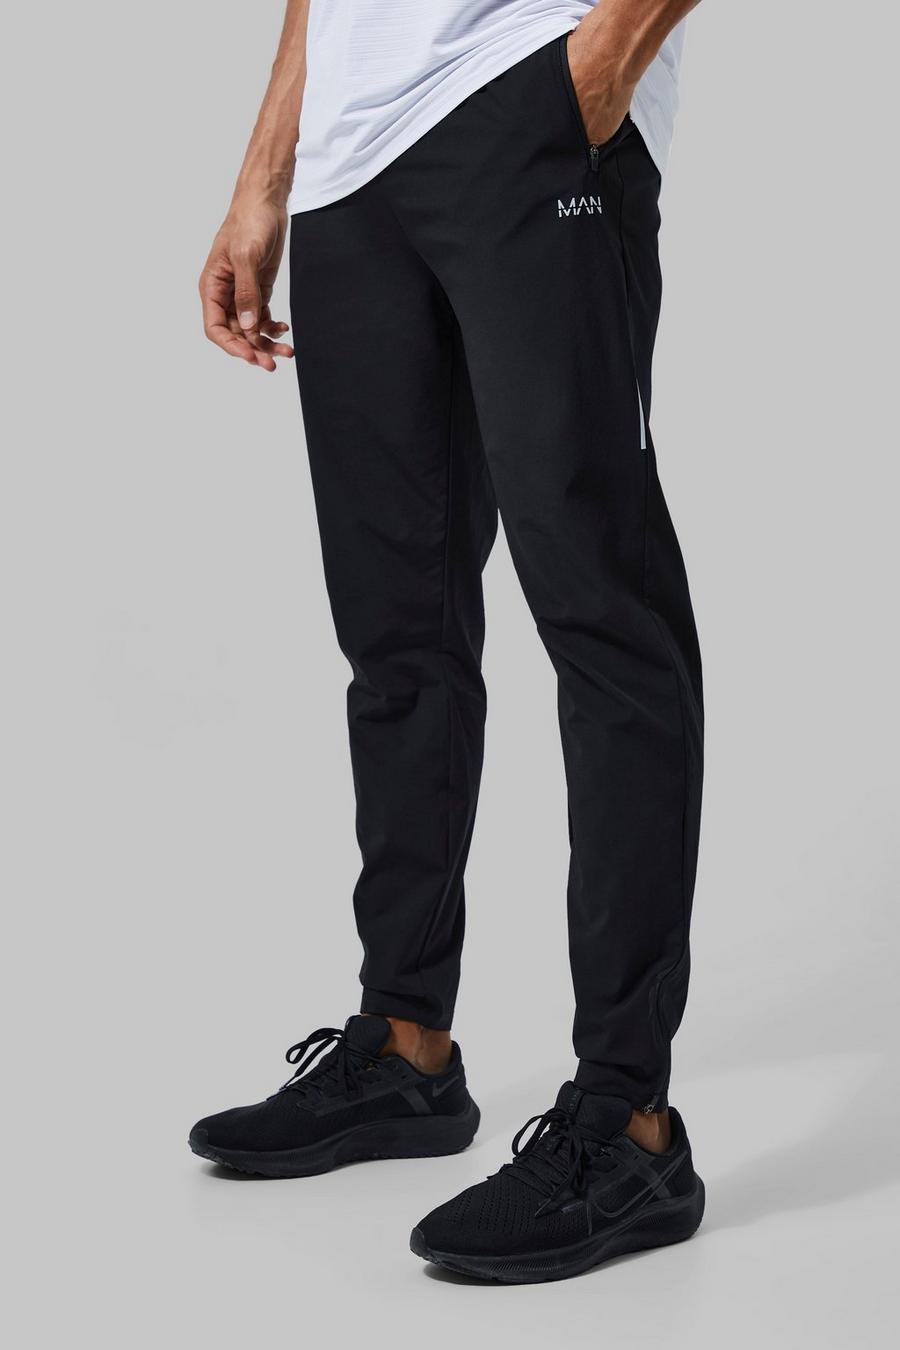 Pantalón deportivo Tall MAN Active ligero resistente, Black image number 1